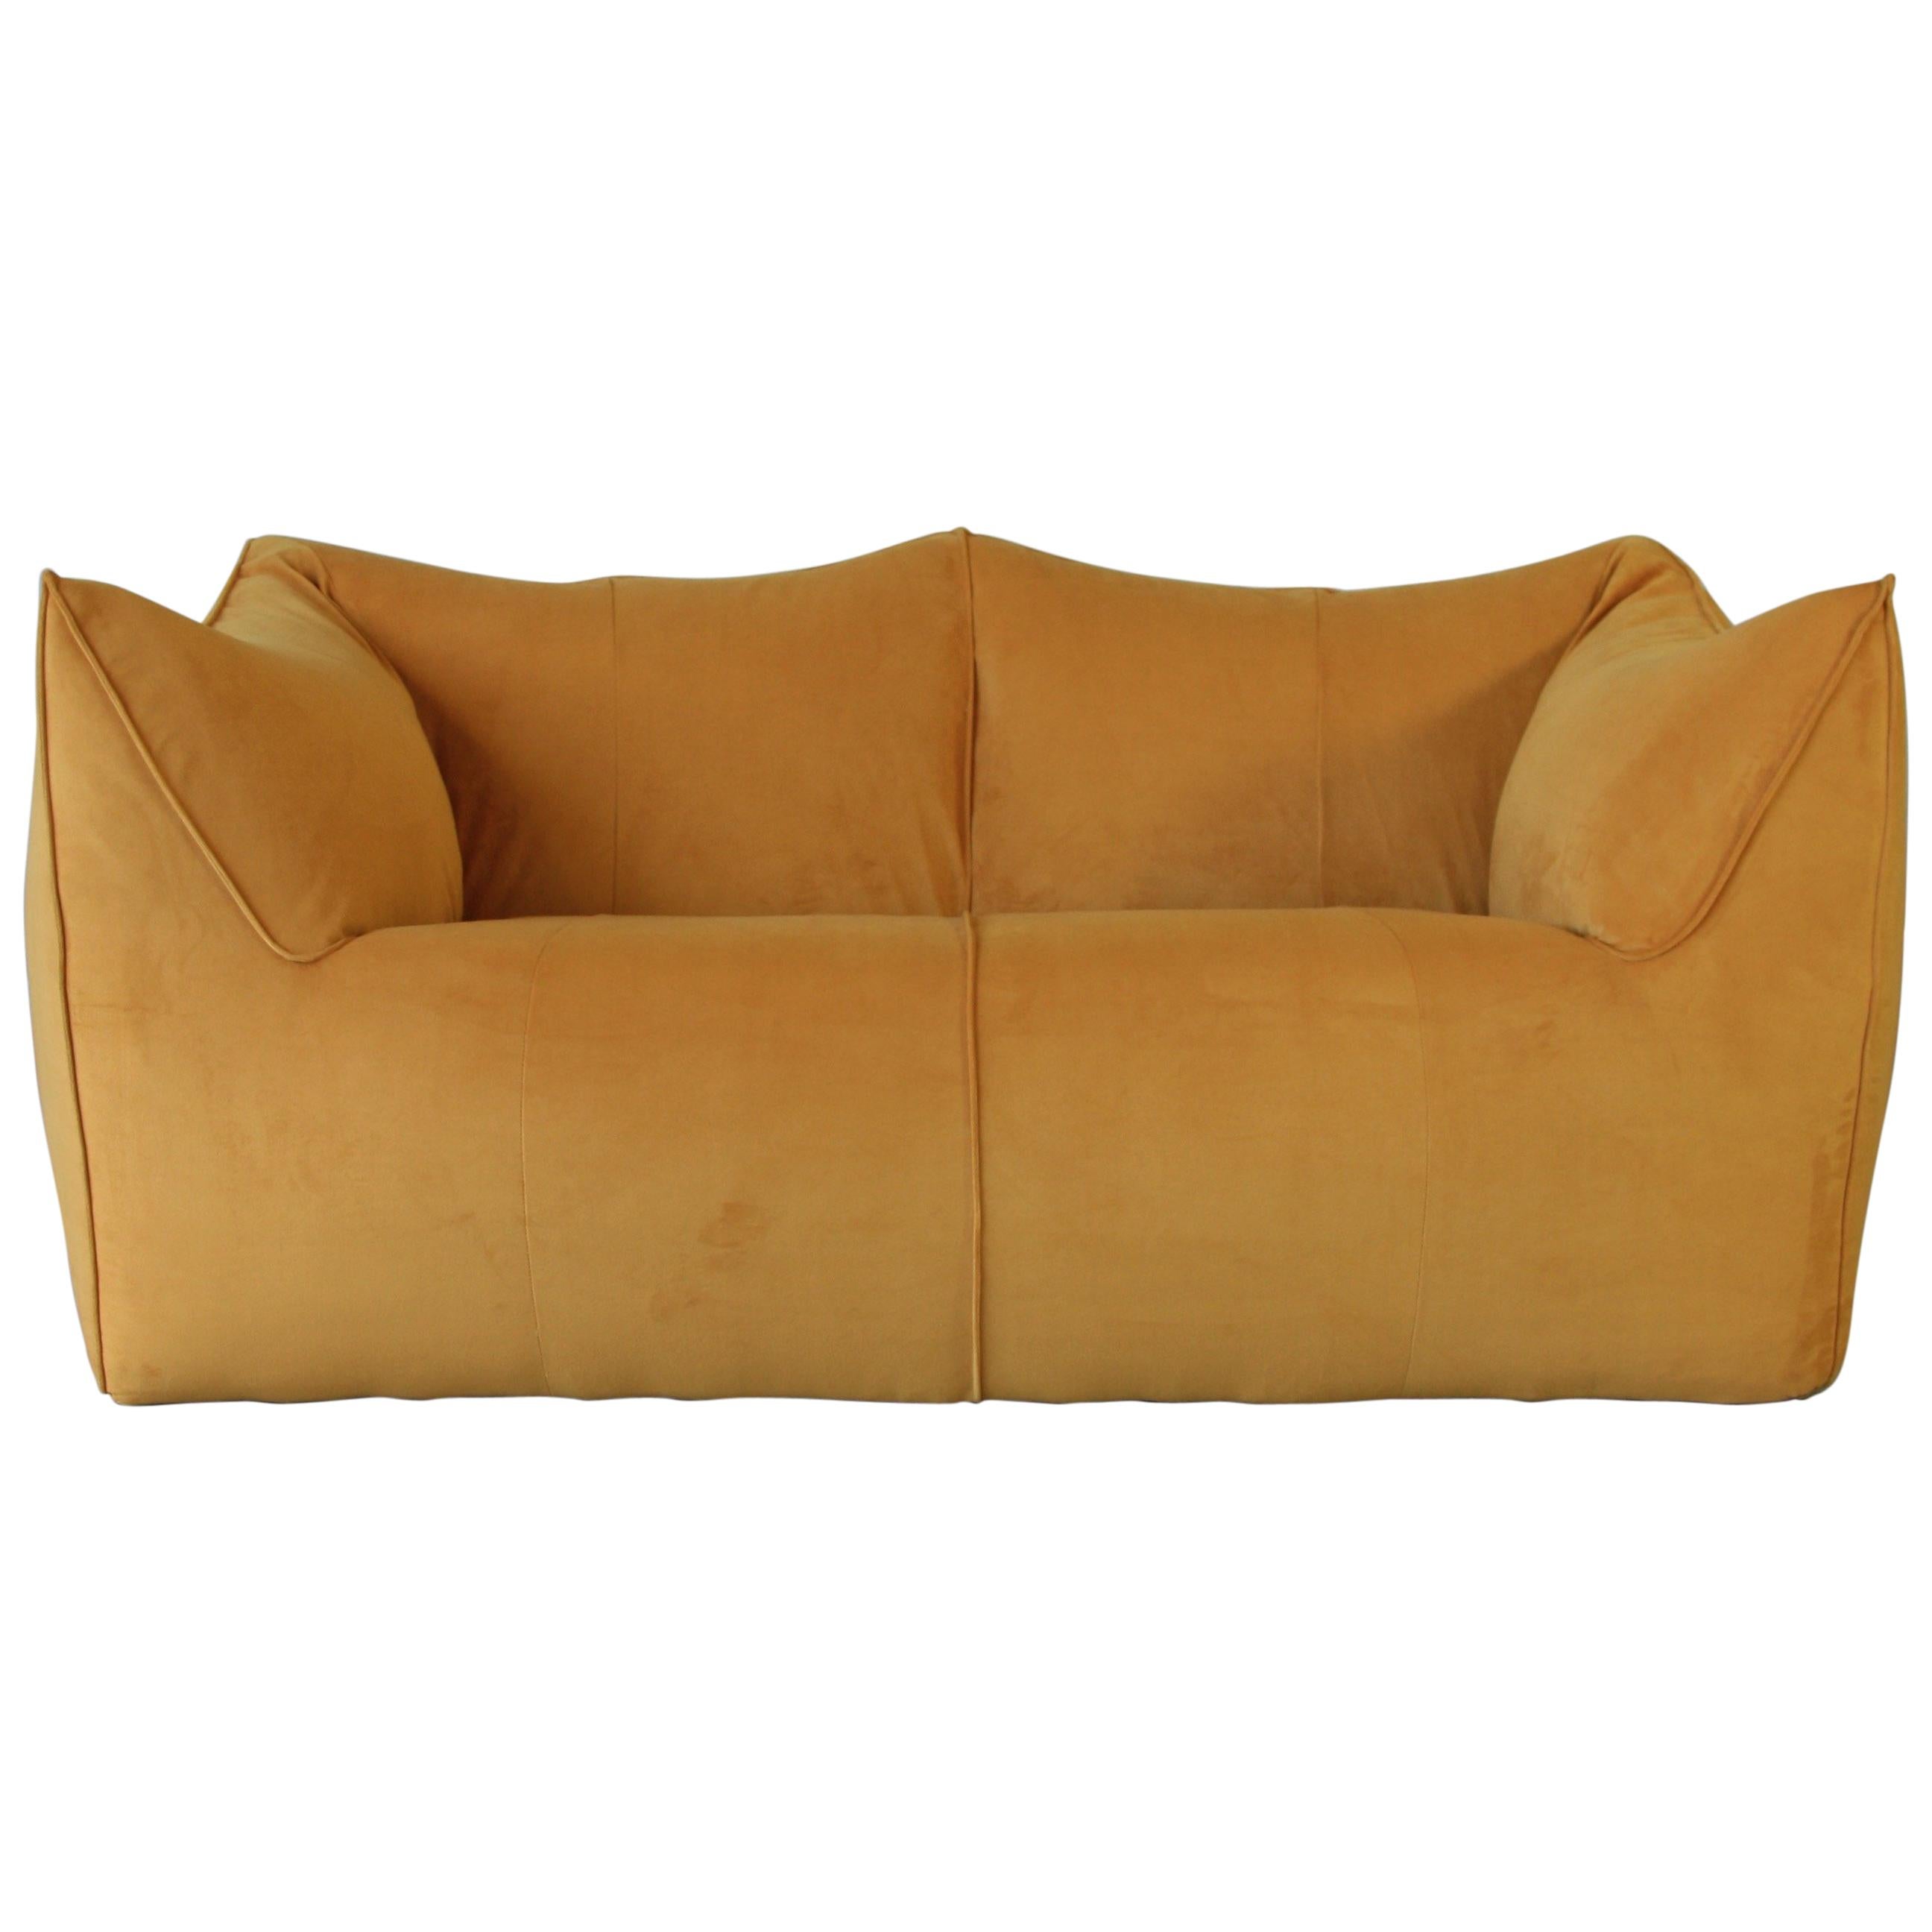 Bambole, Two-Seat Sofa by Mario Bellini